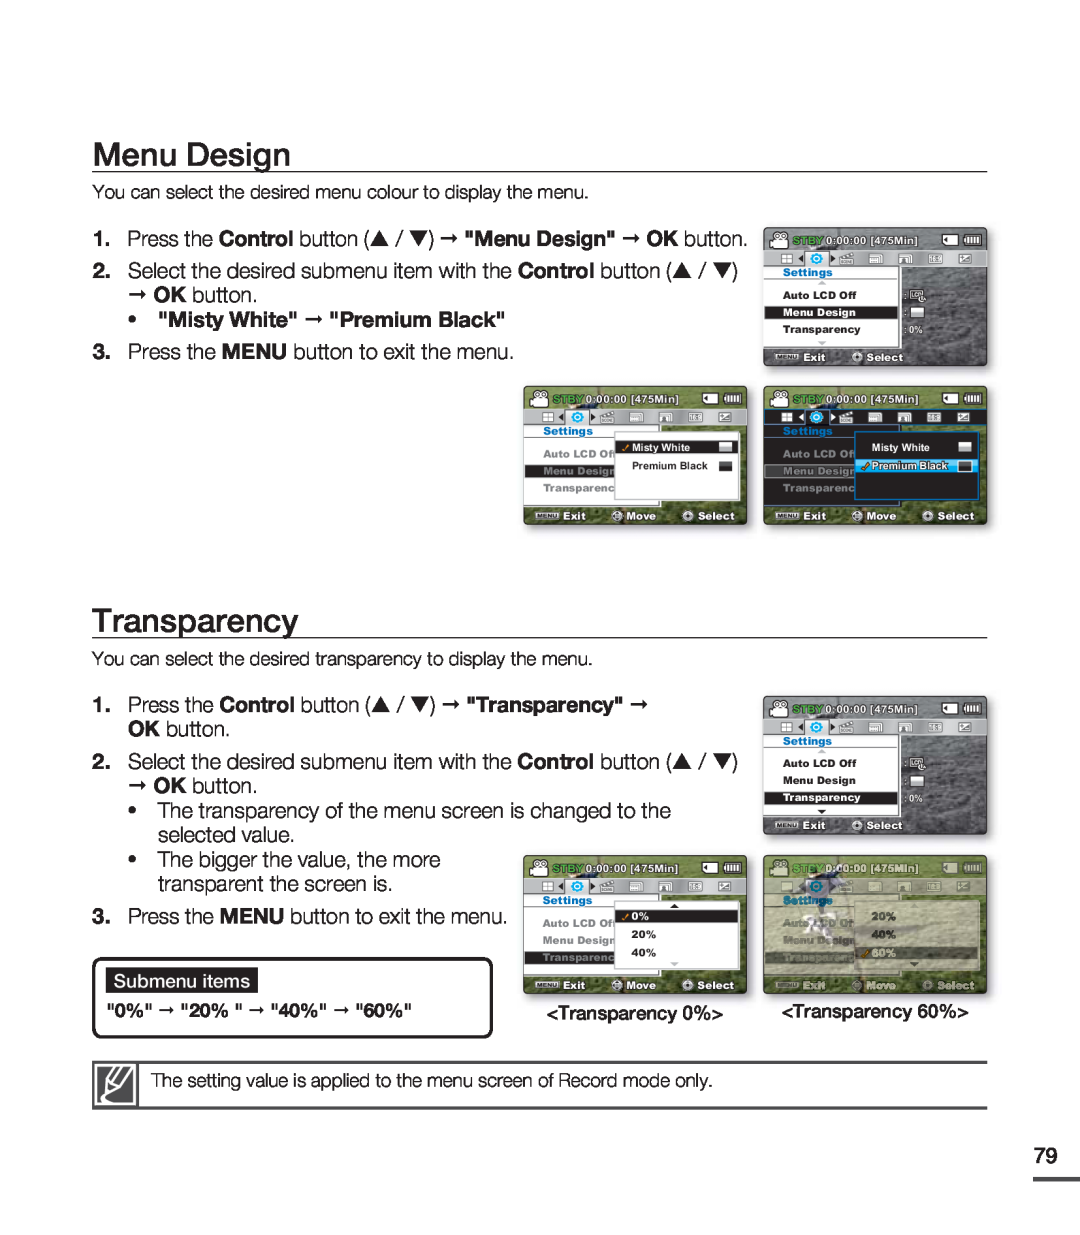 Samsung SMX-C24LP/EDC manual Menu Design, Transparency, Misty White Premium Black, Press the MENU button to exit the menu 